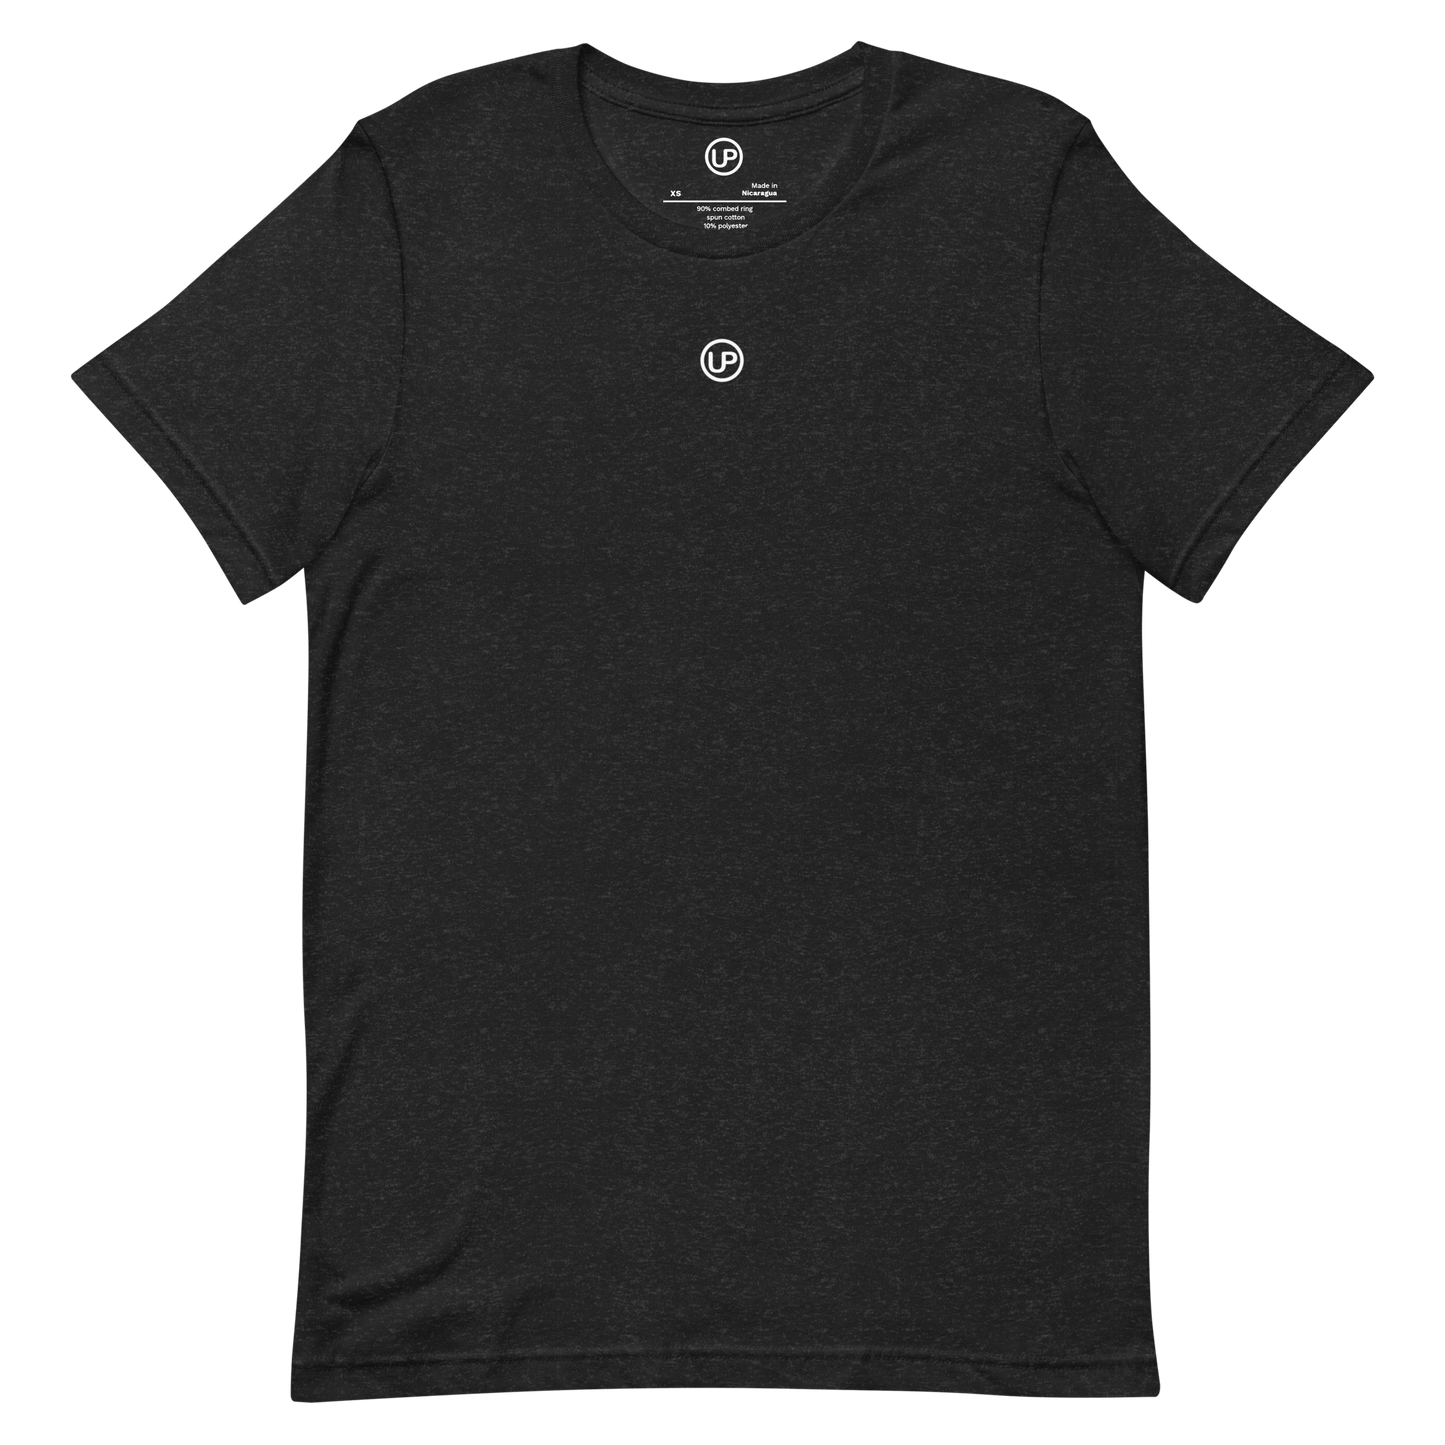 Up Brands Minimalistic Men's Tee Shirt (Black Heather)